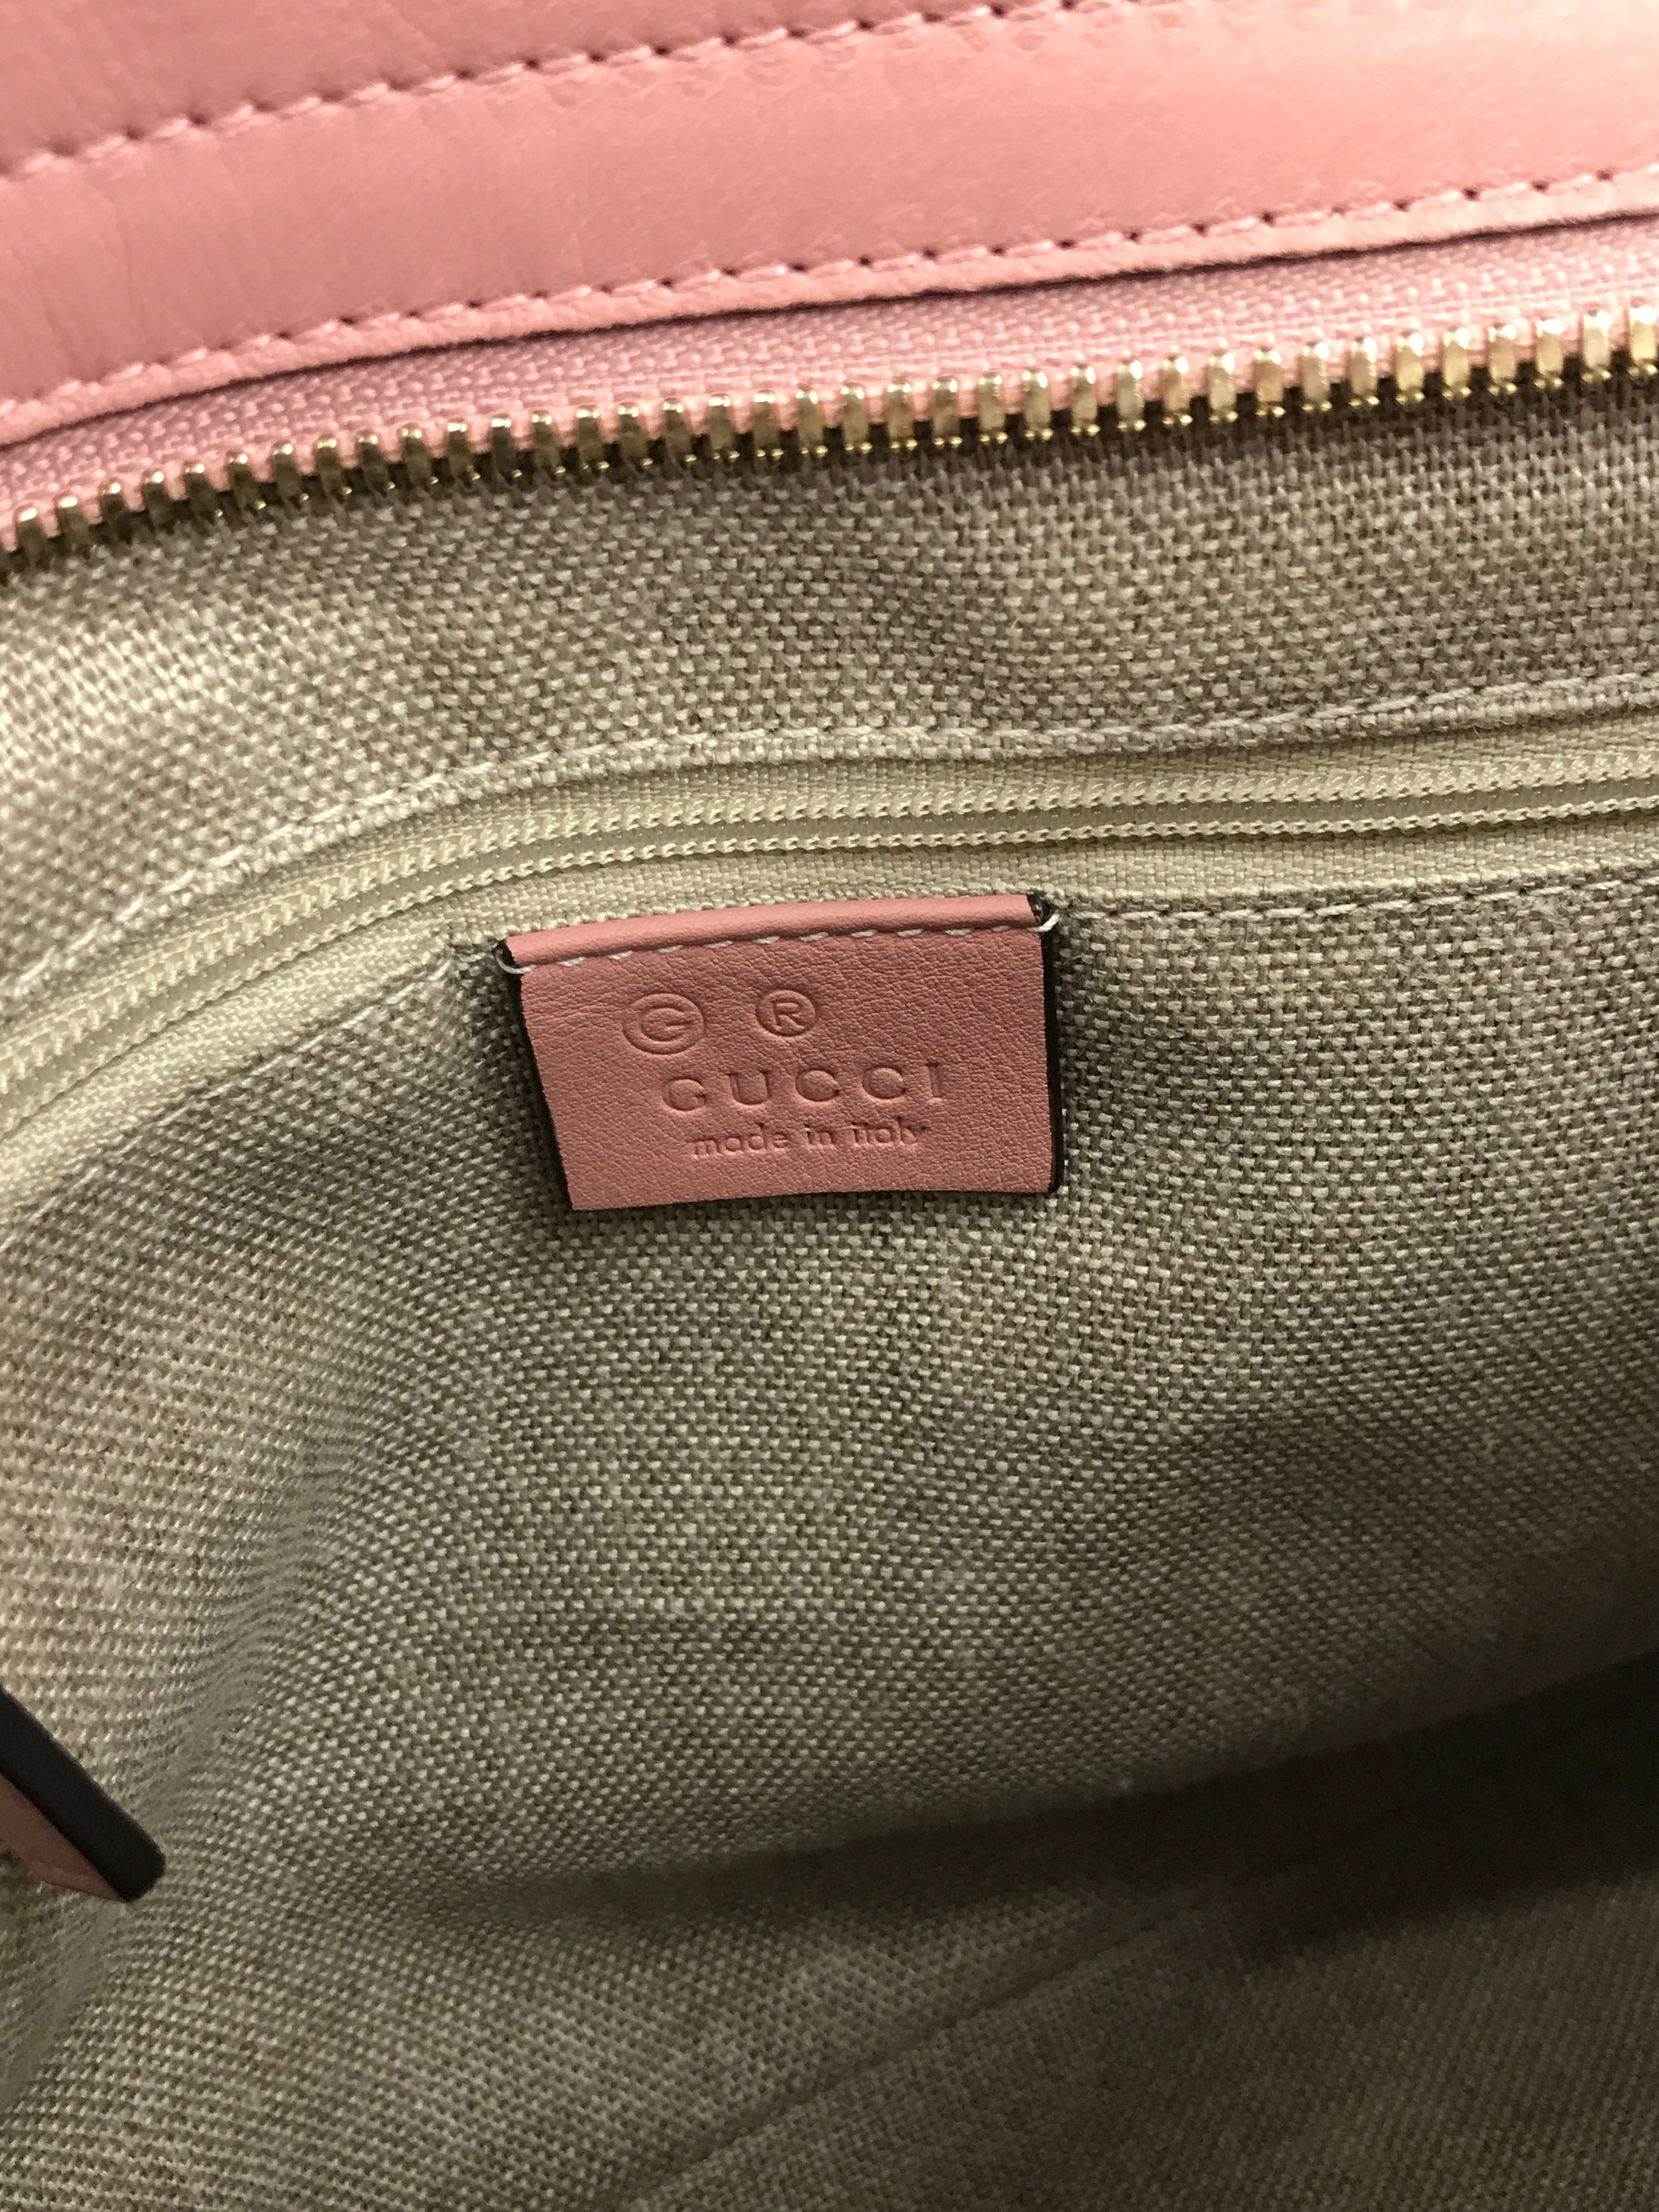 Light Pink Microguccissima Bree Mini Tote Bag w/Removable Strap W/LGHW